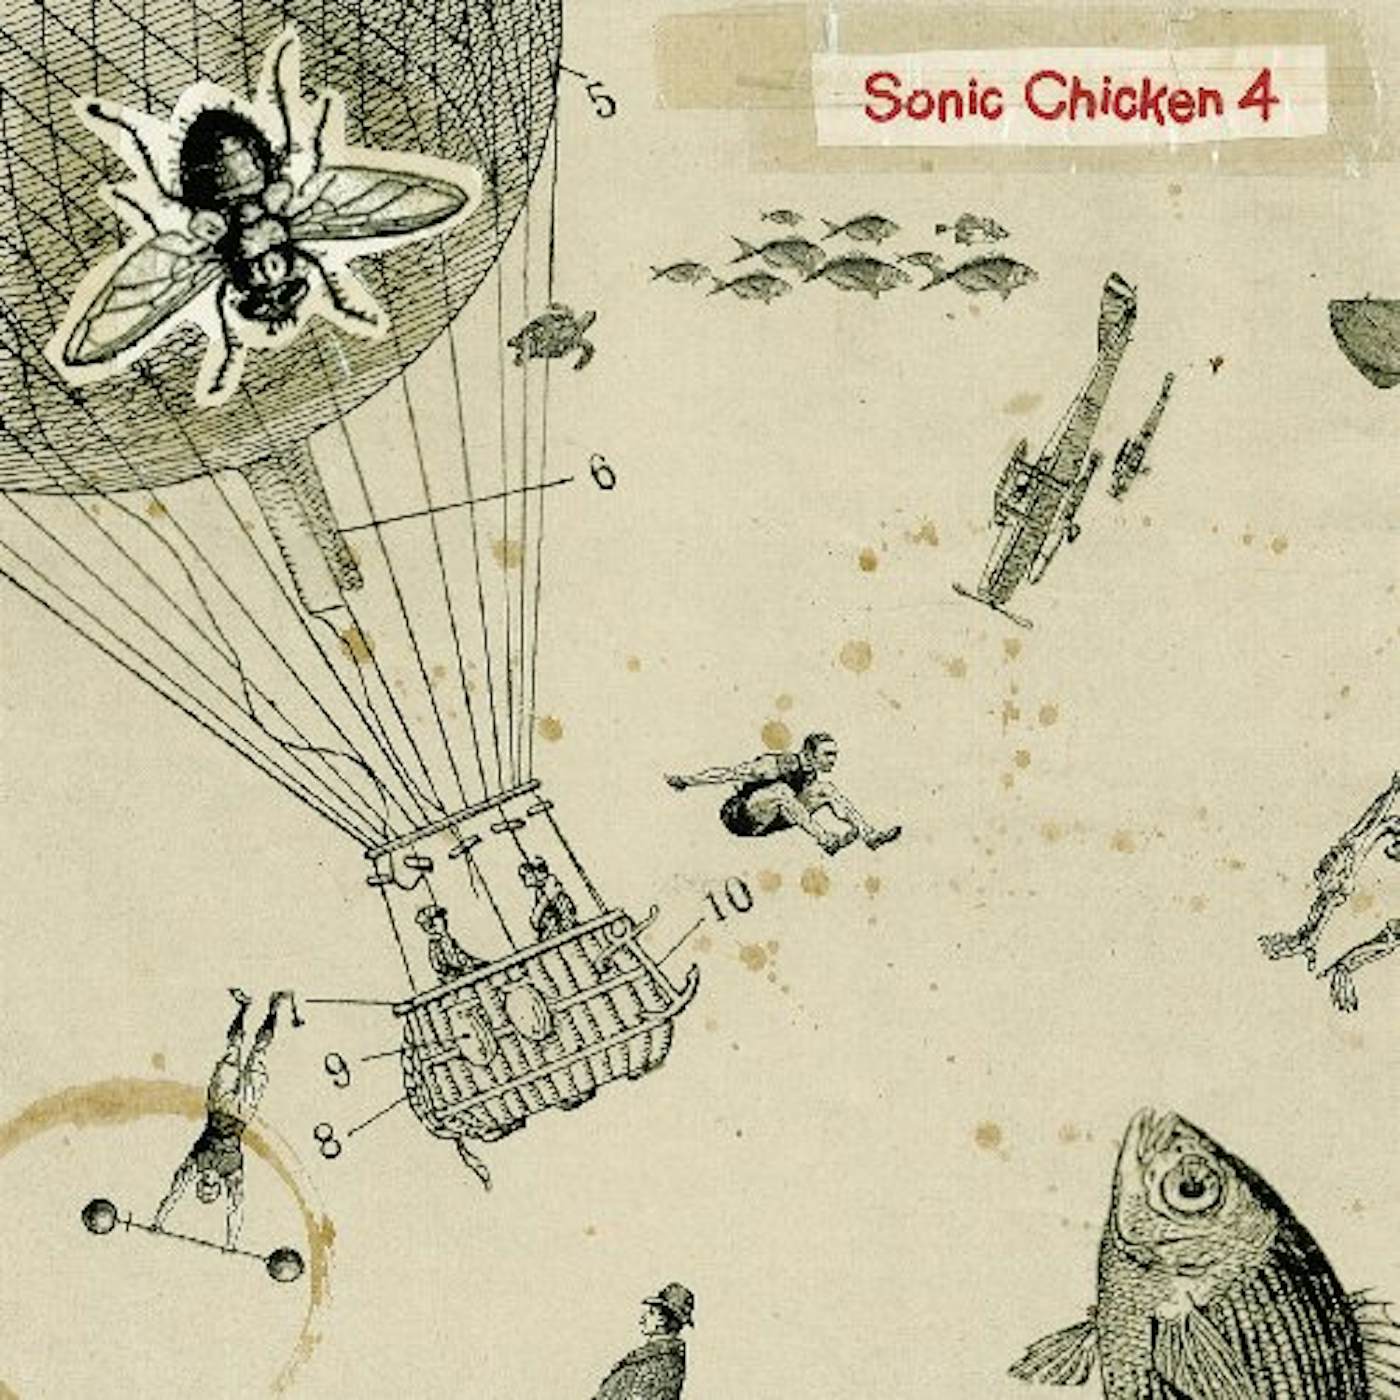 Sonic Chicken 4 Vinyl Record